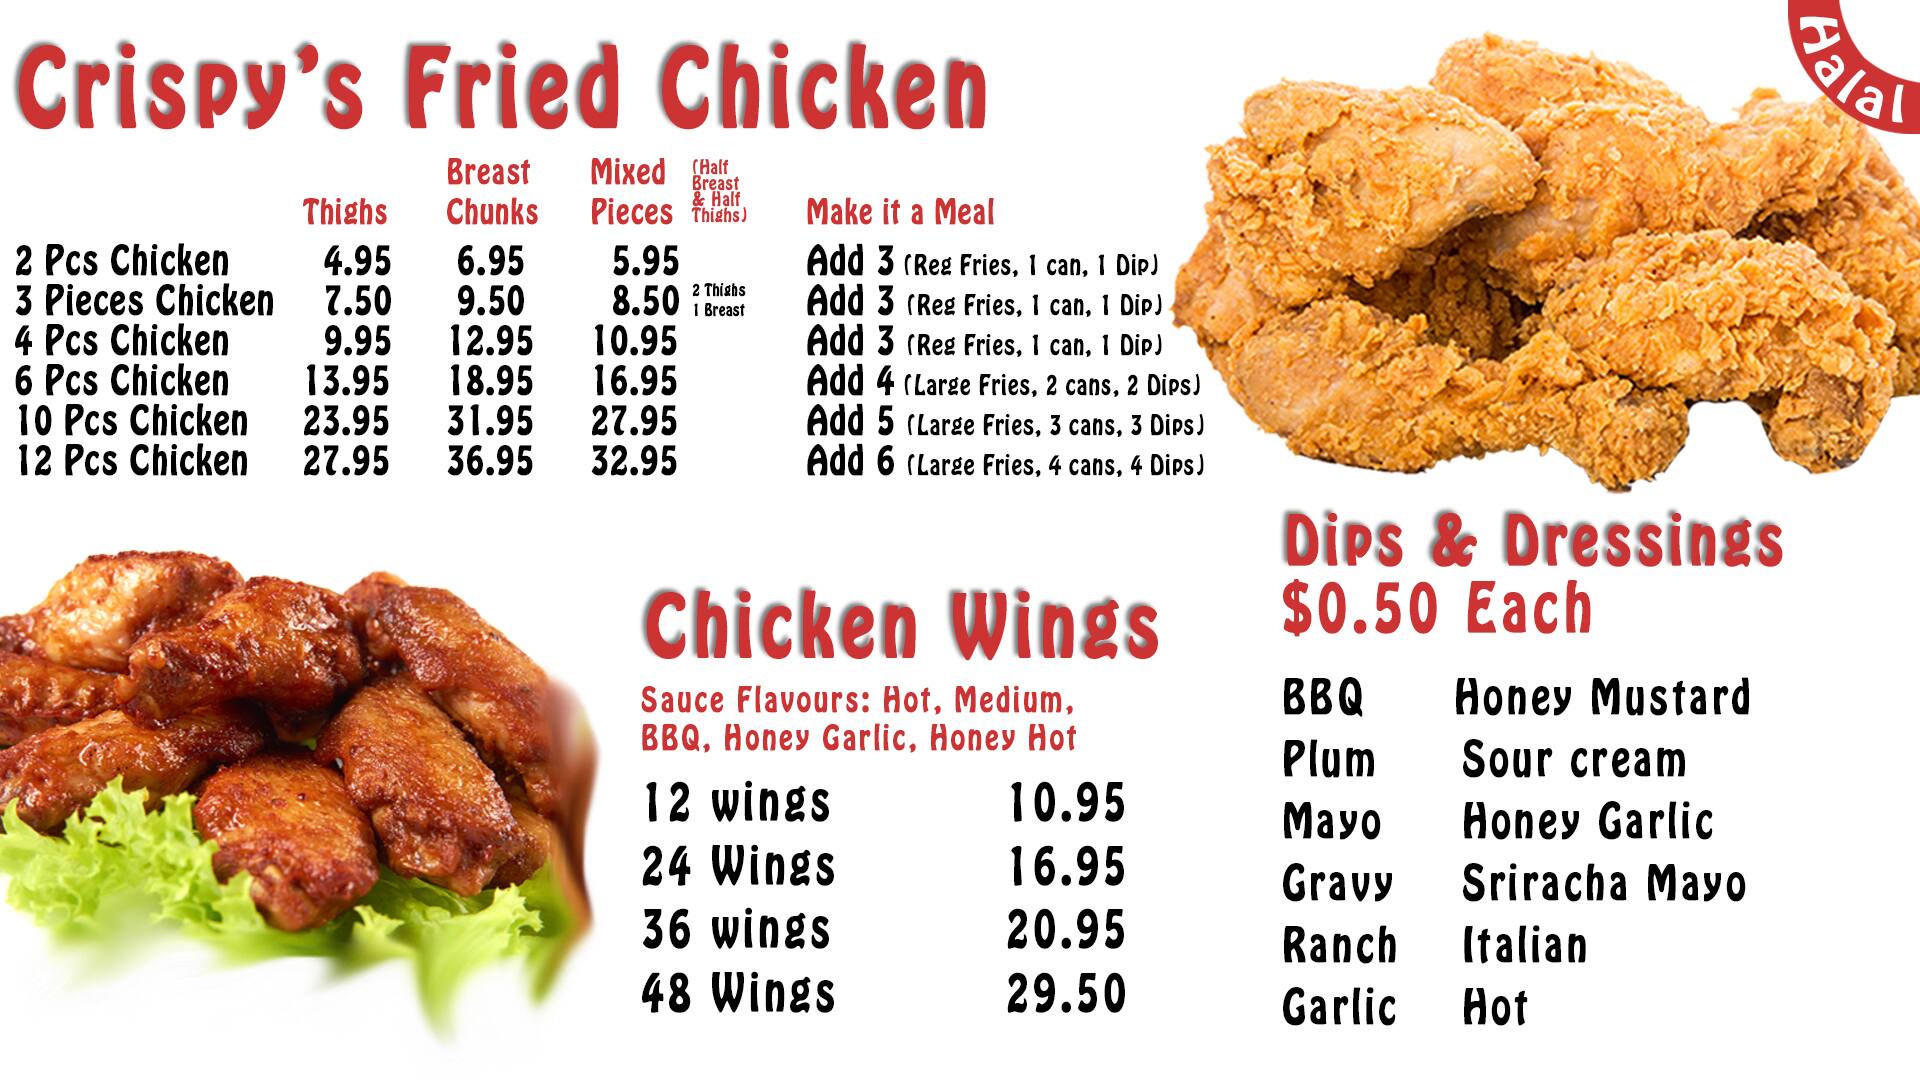 Carter's fried chicken blackshear menu